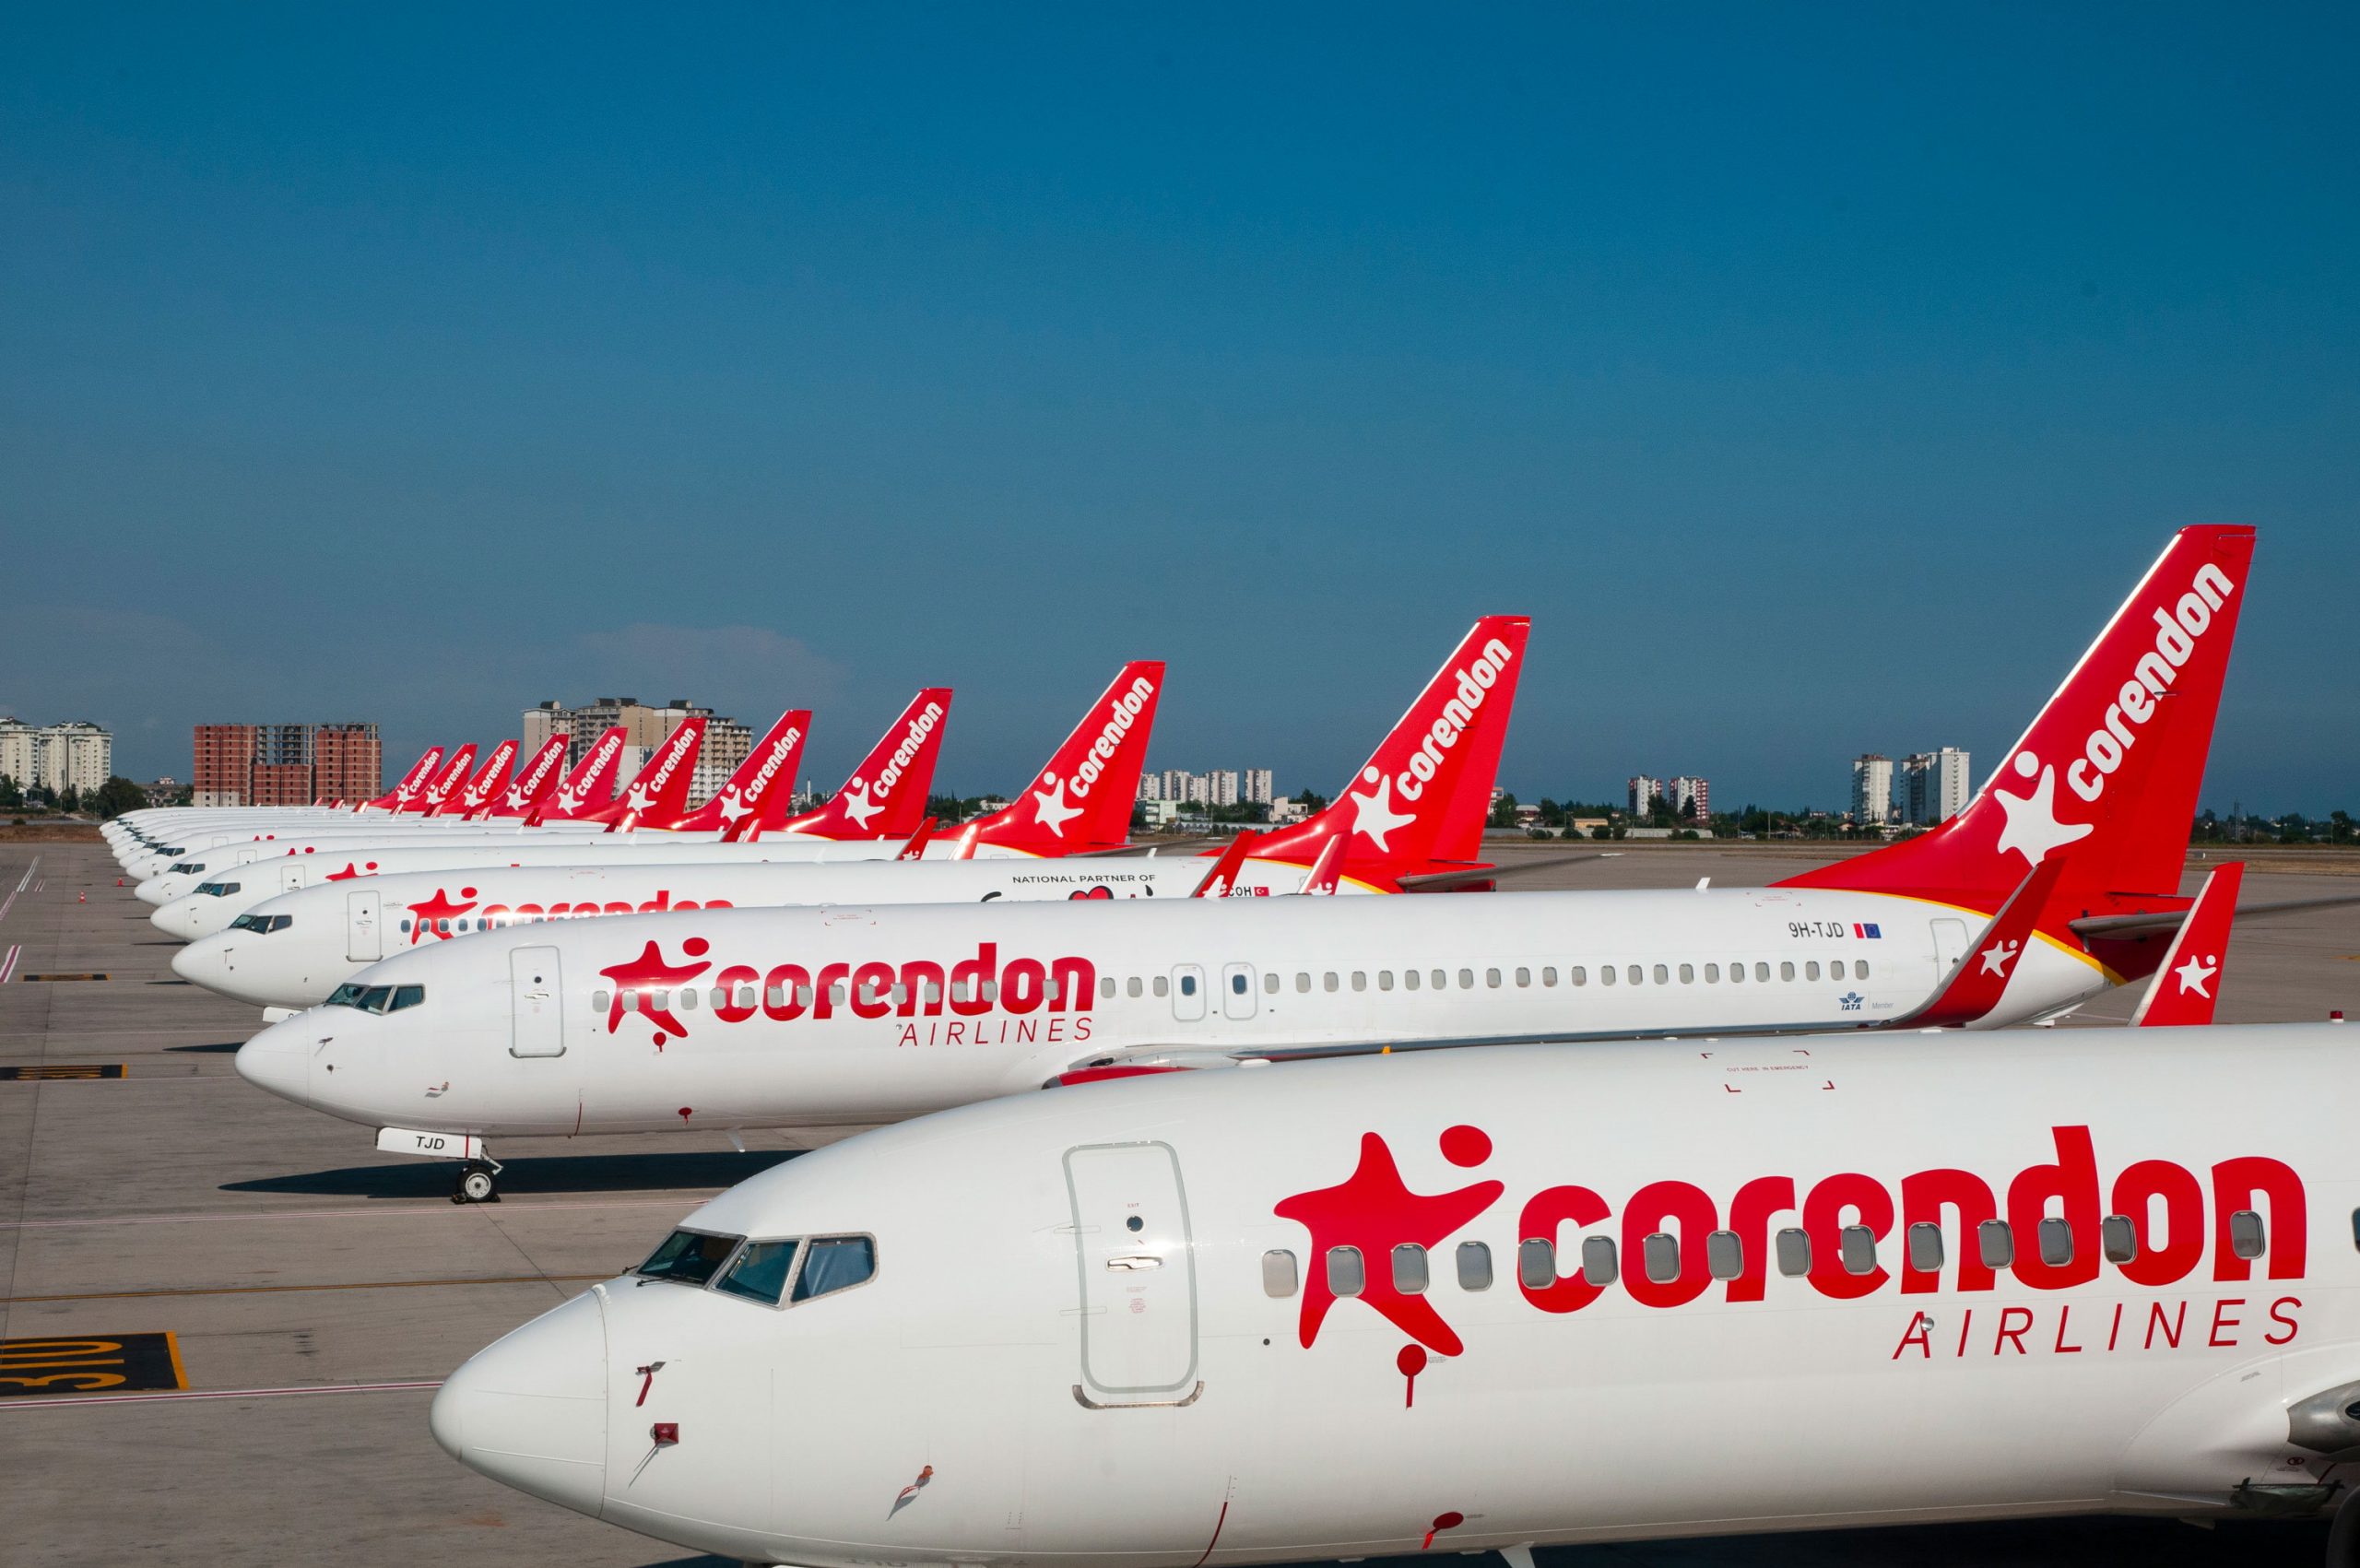 Rozkład Corendon Airlines z Polski na lato 2022